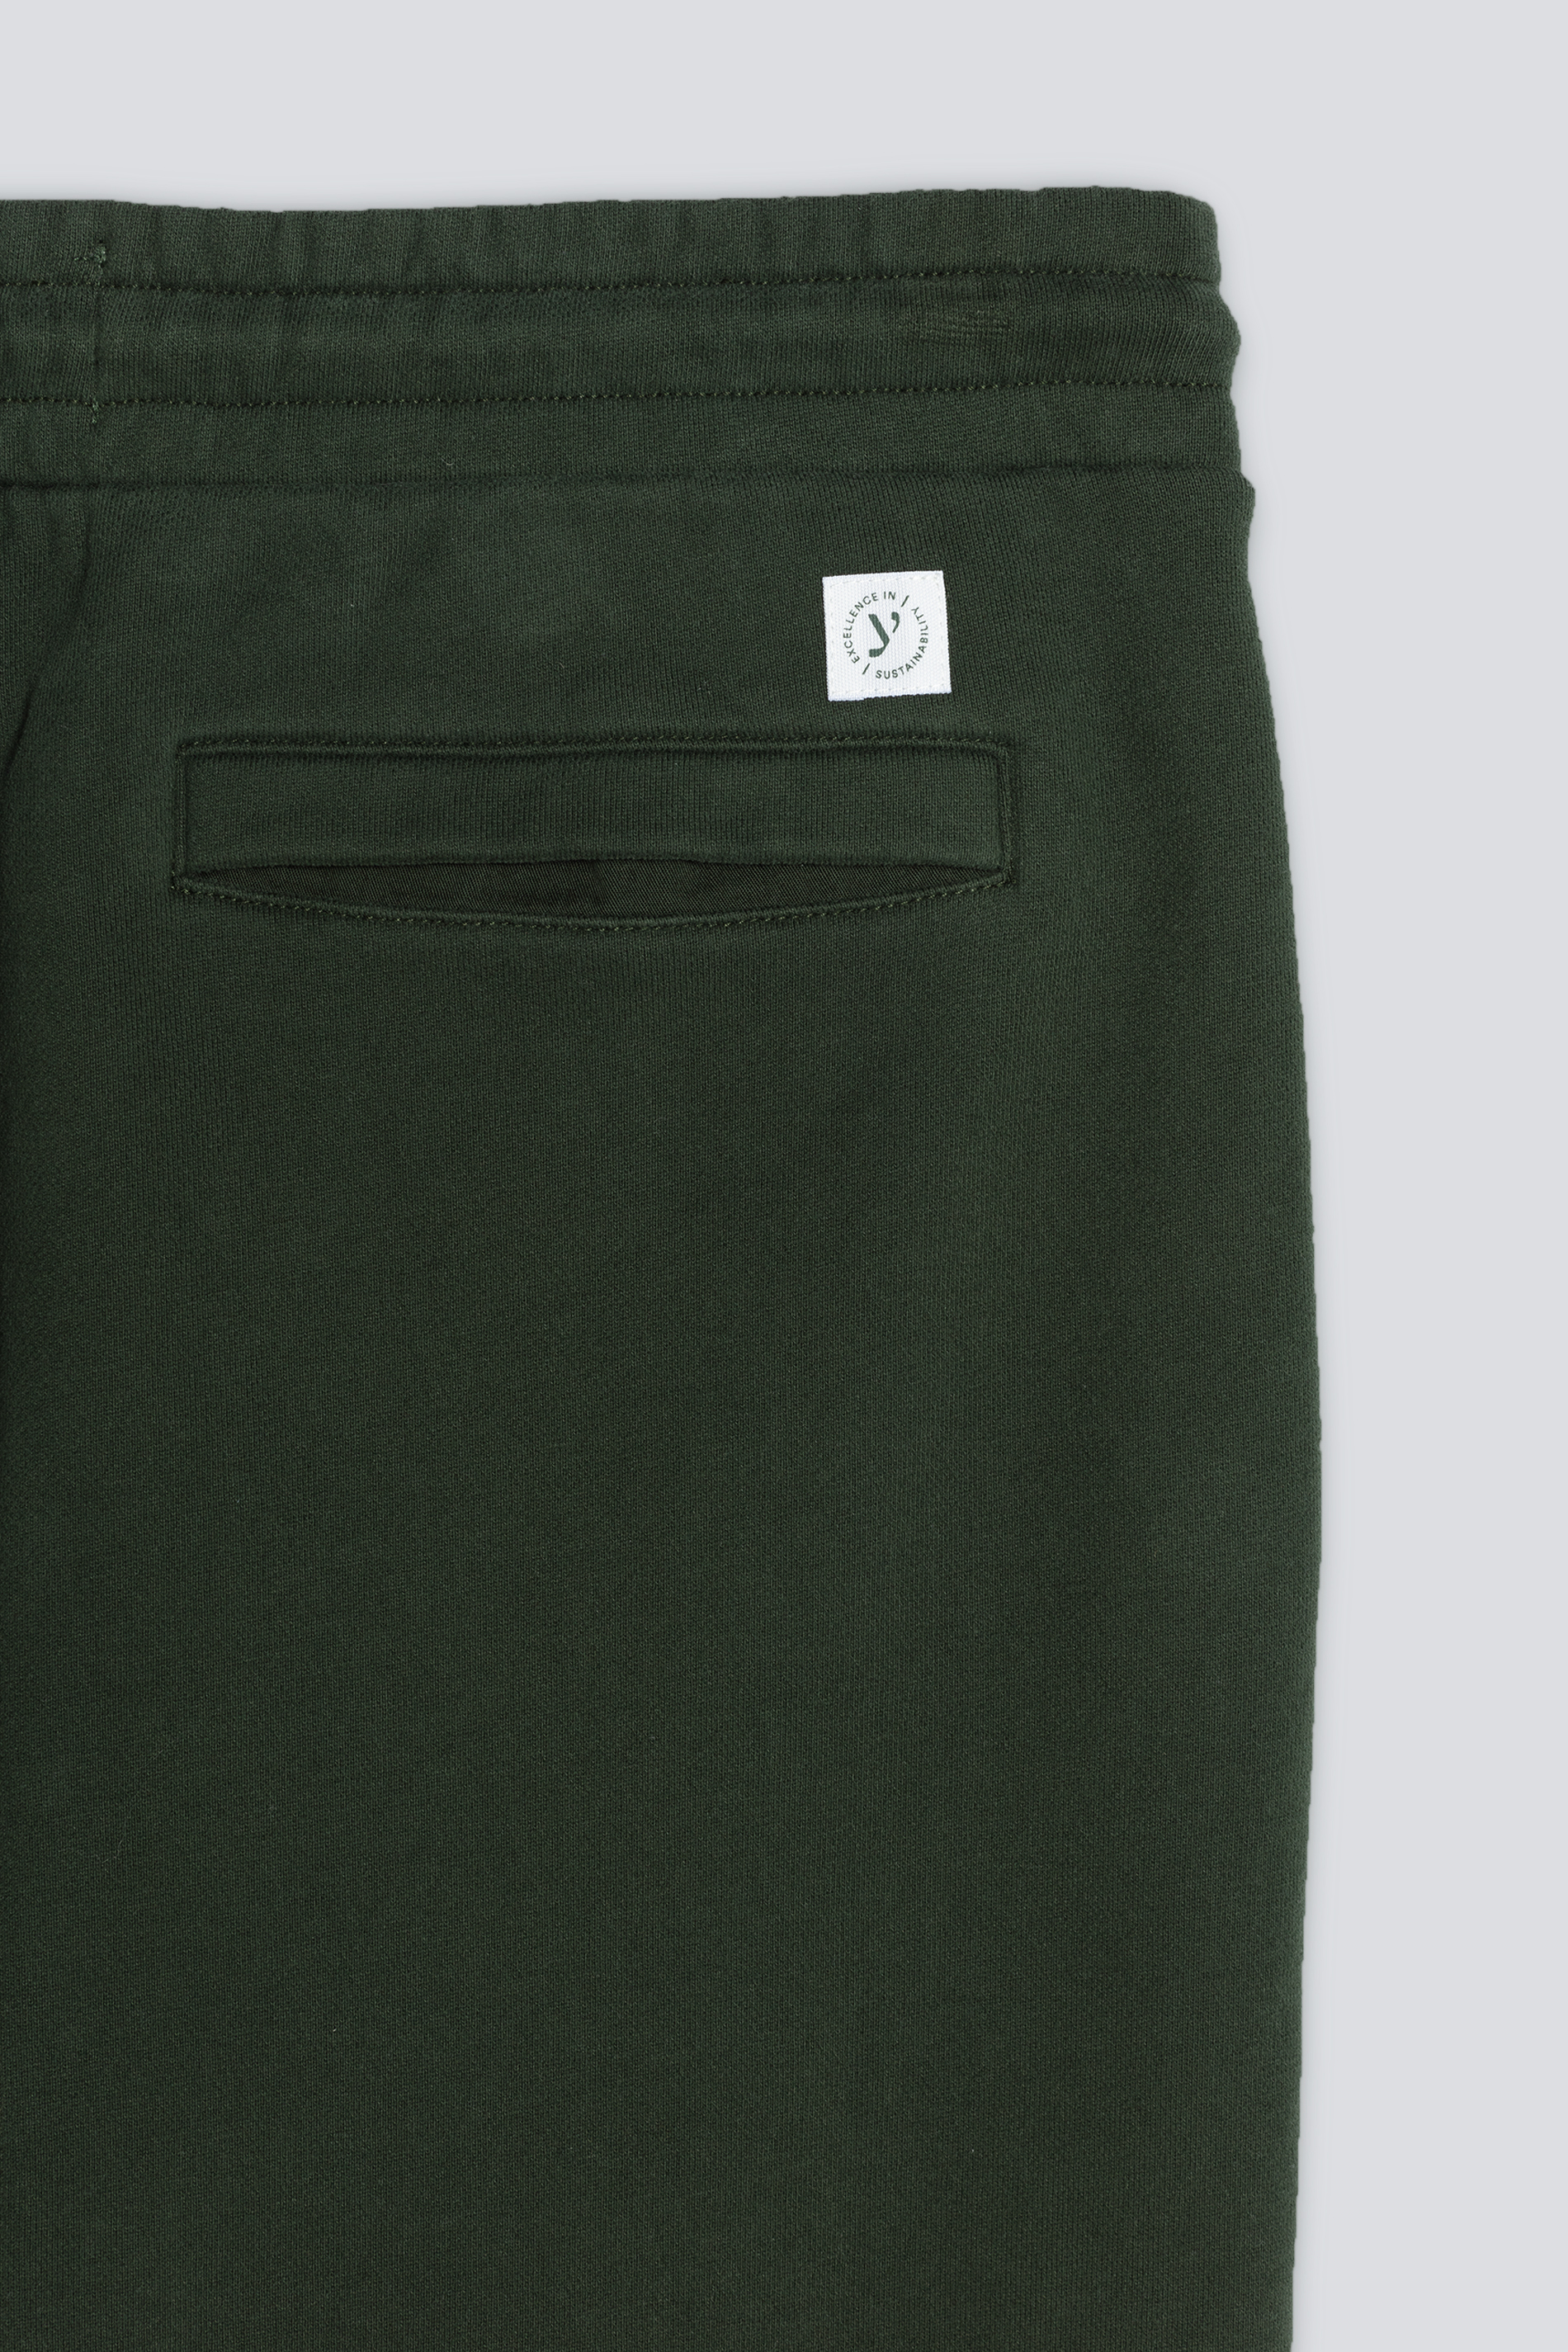 Track pants Duffel Bag Serie Soft Felpa Detail View 01 | mey®